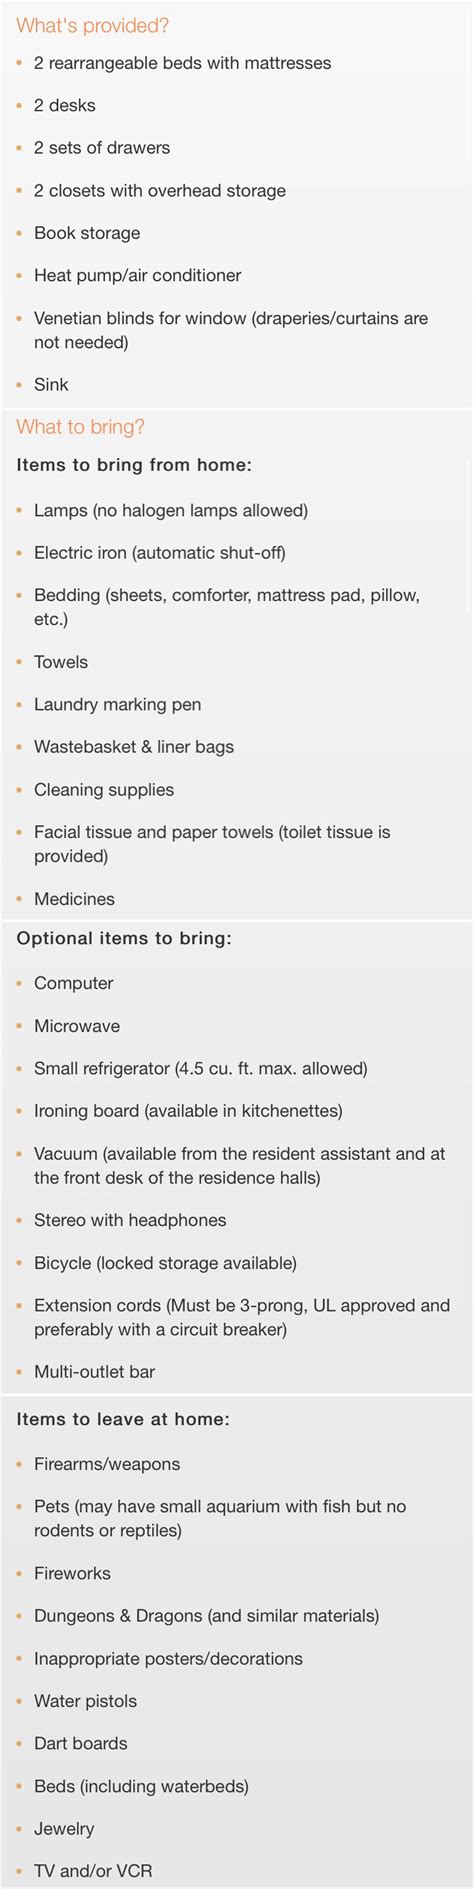 sau dorm rules laundry mark heat pump air conditioner set of drawers